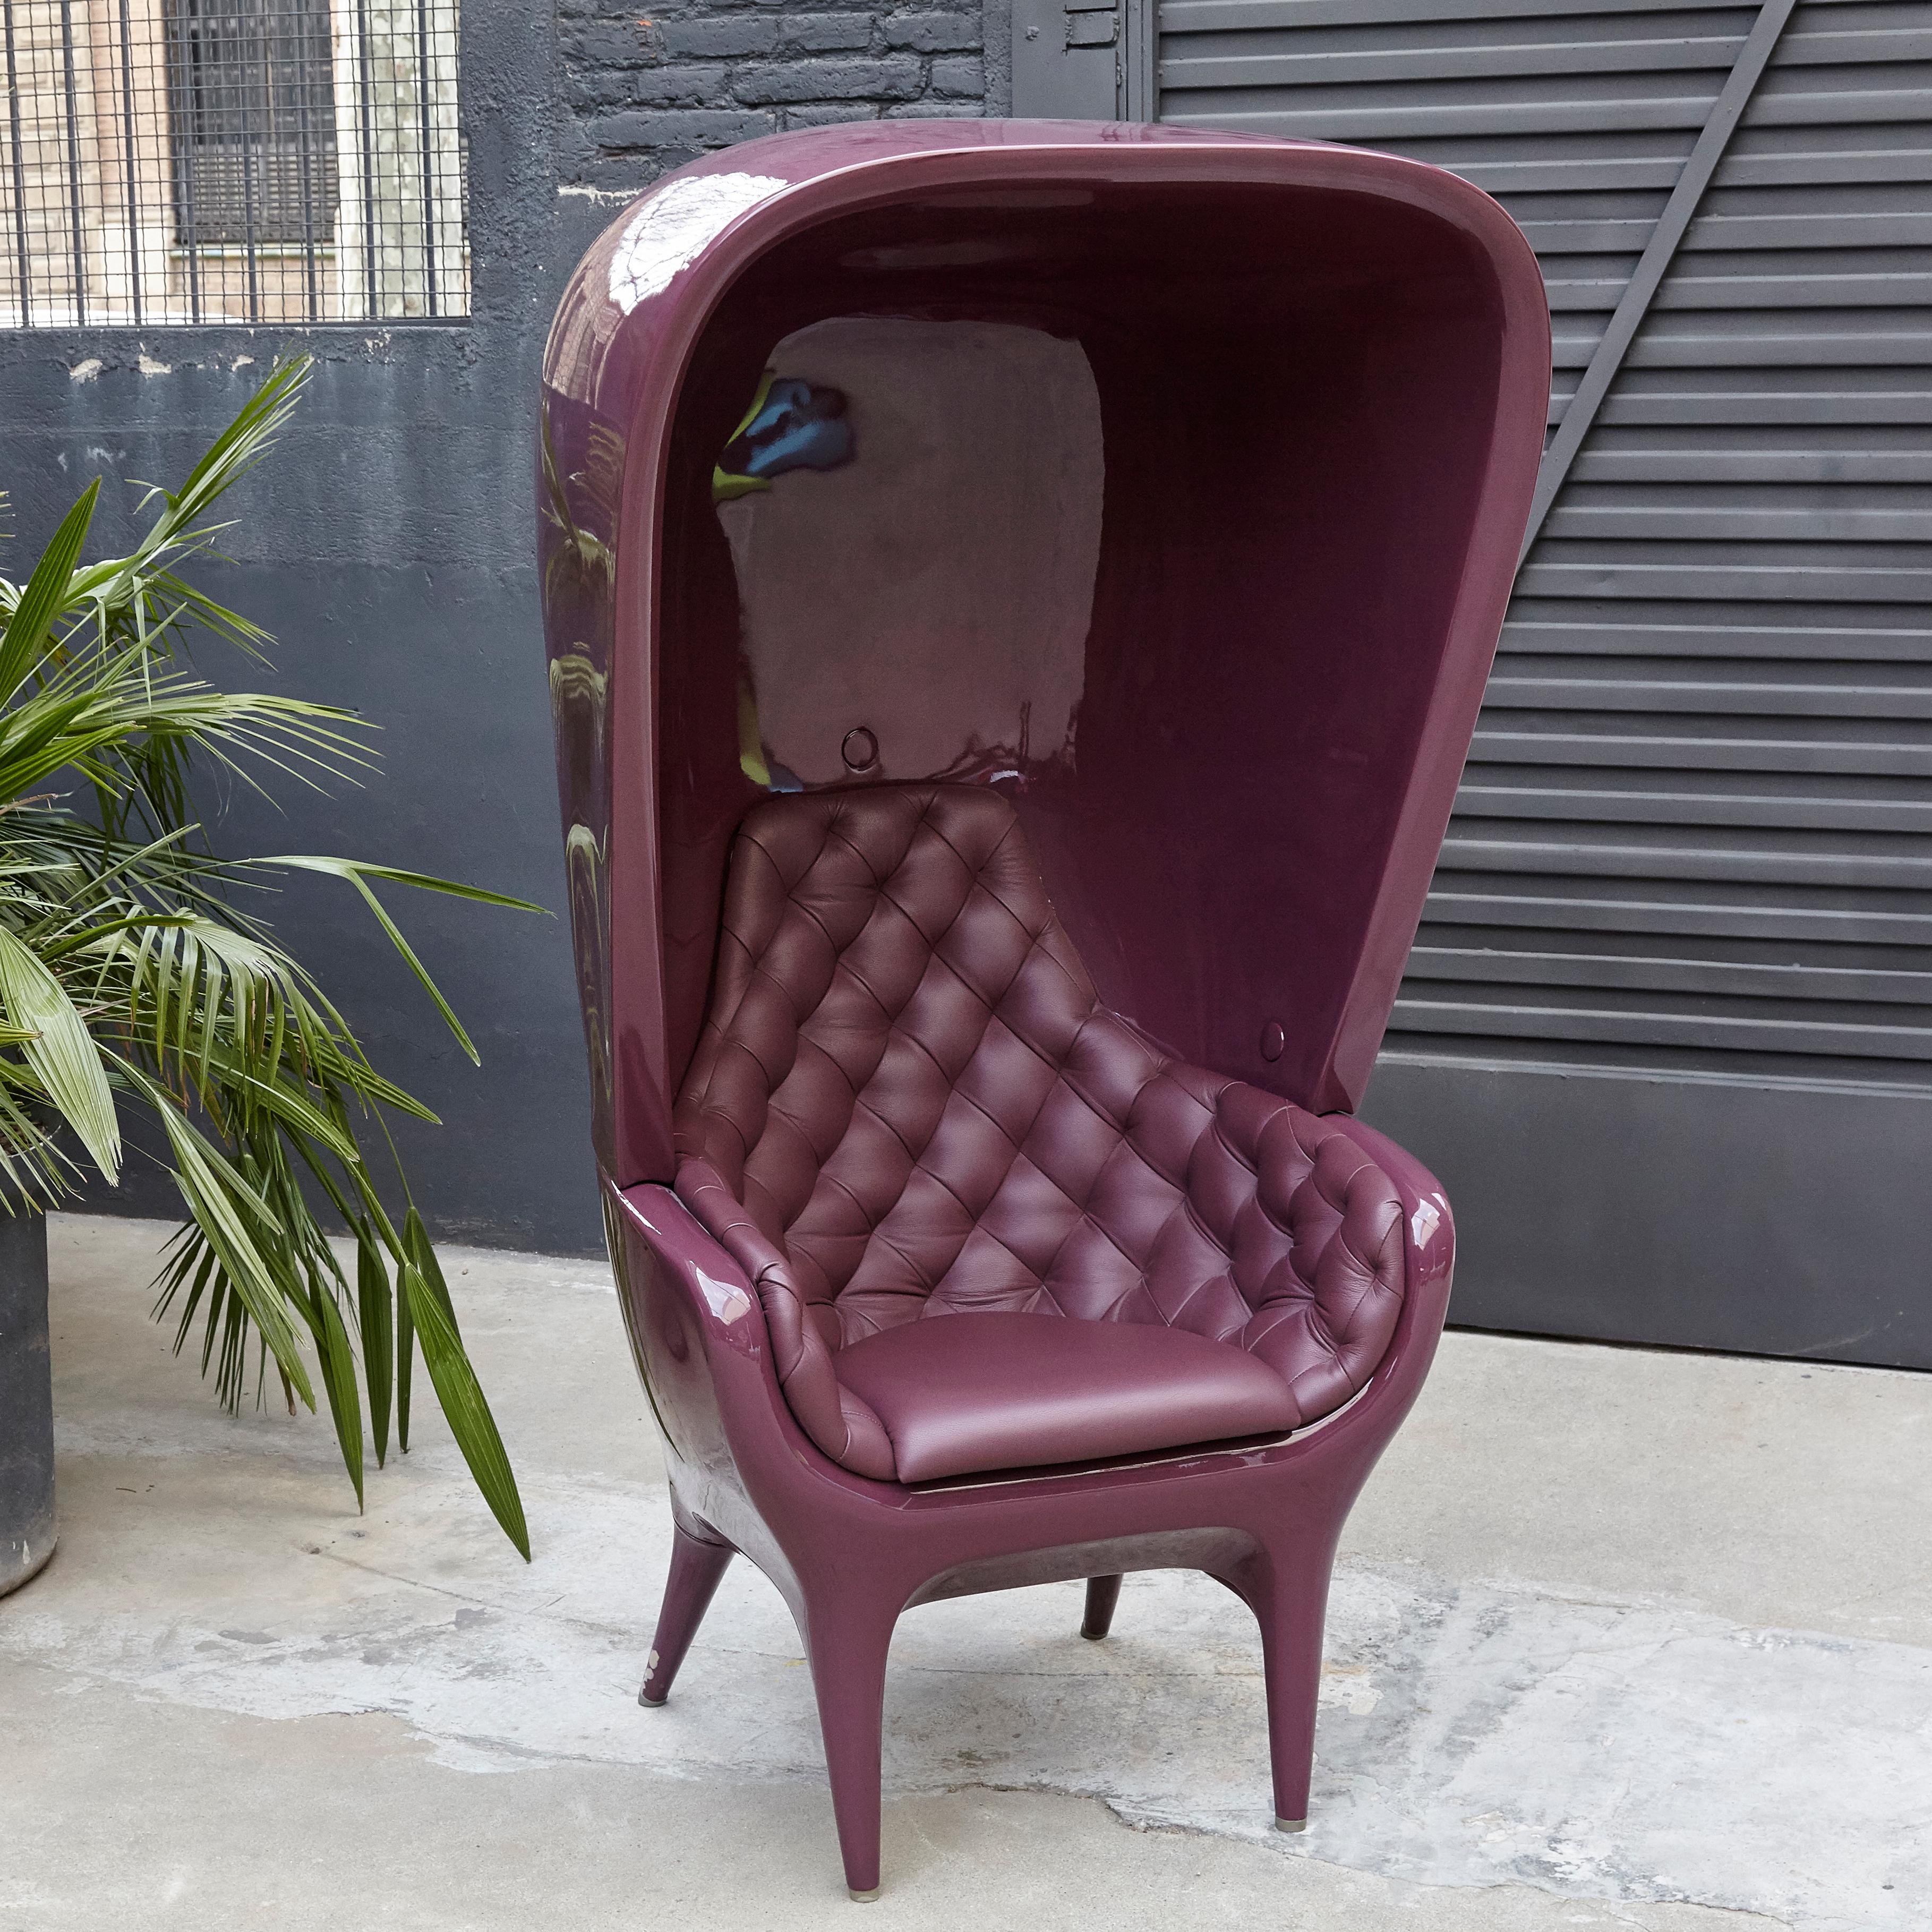 Modern Jaime Hayon Contemporary Showtime Armchair Lacquered Purple Poltrona